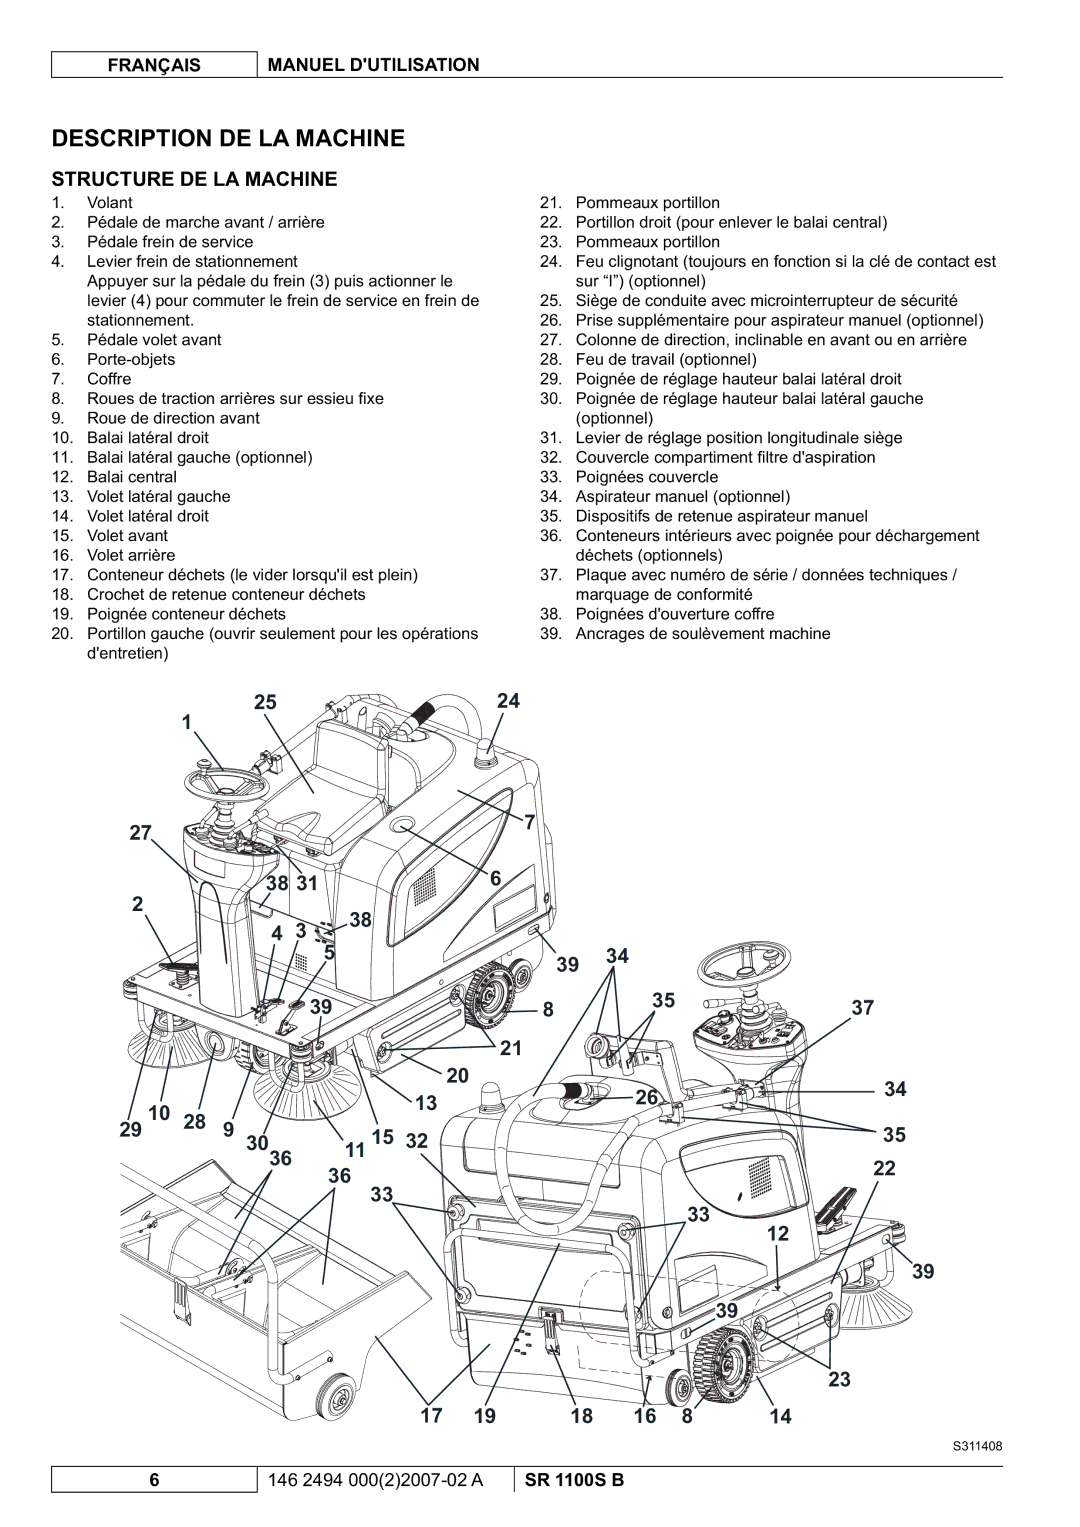 Nilfisk-Advance America SR 1100S B manual Description DE LA Machine, Structure DE LA Machine 